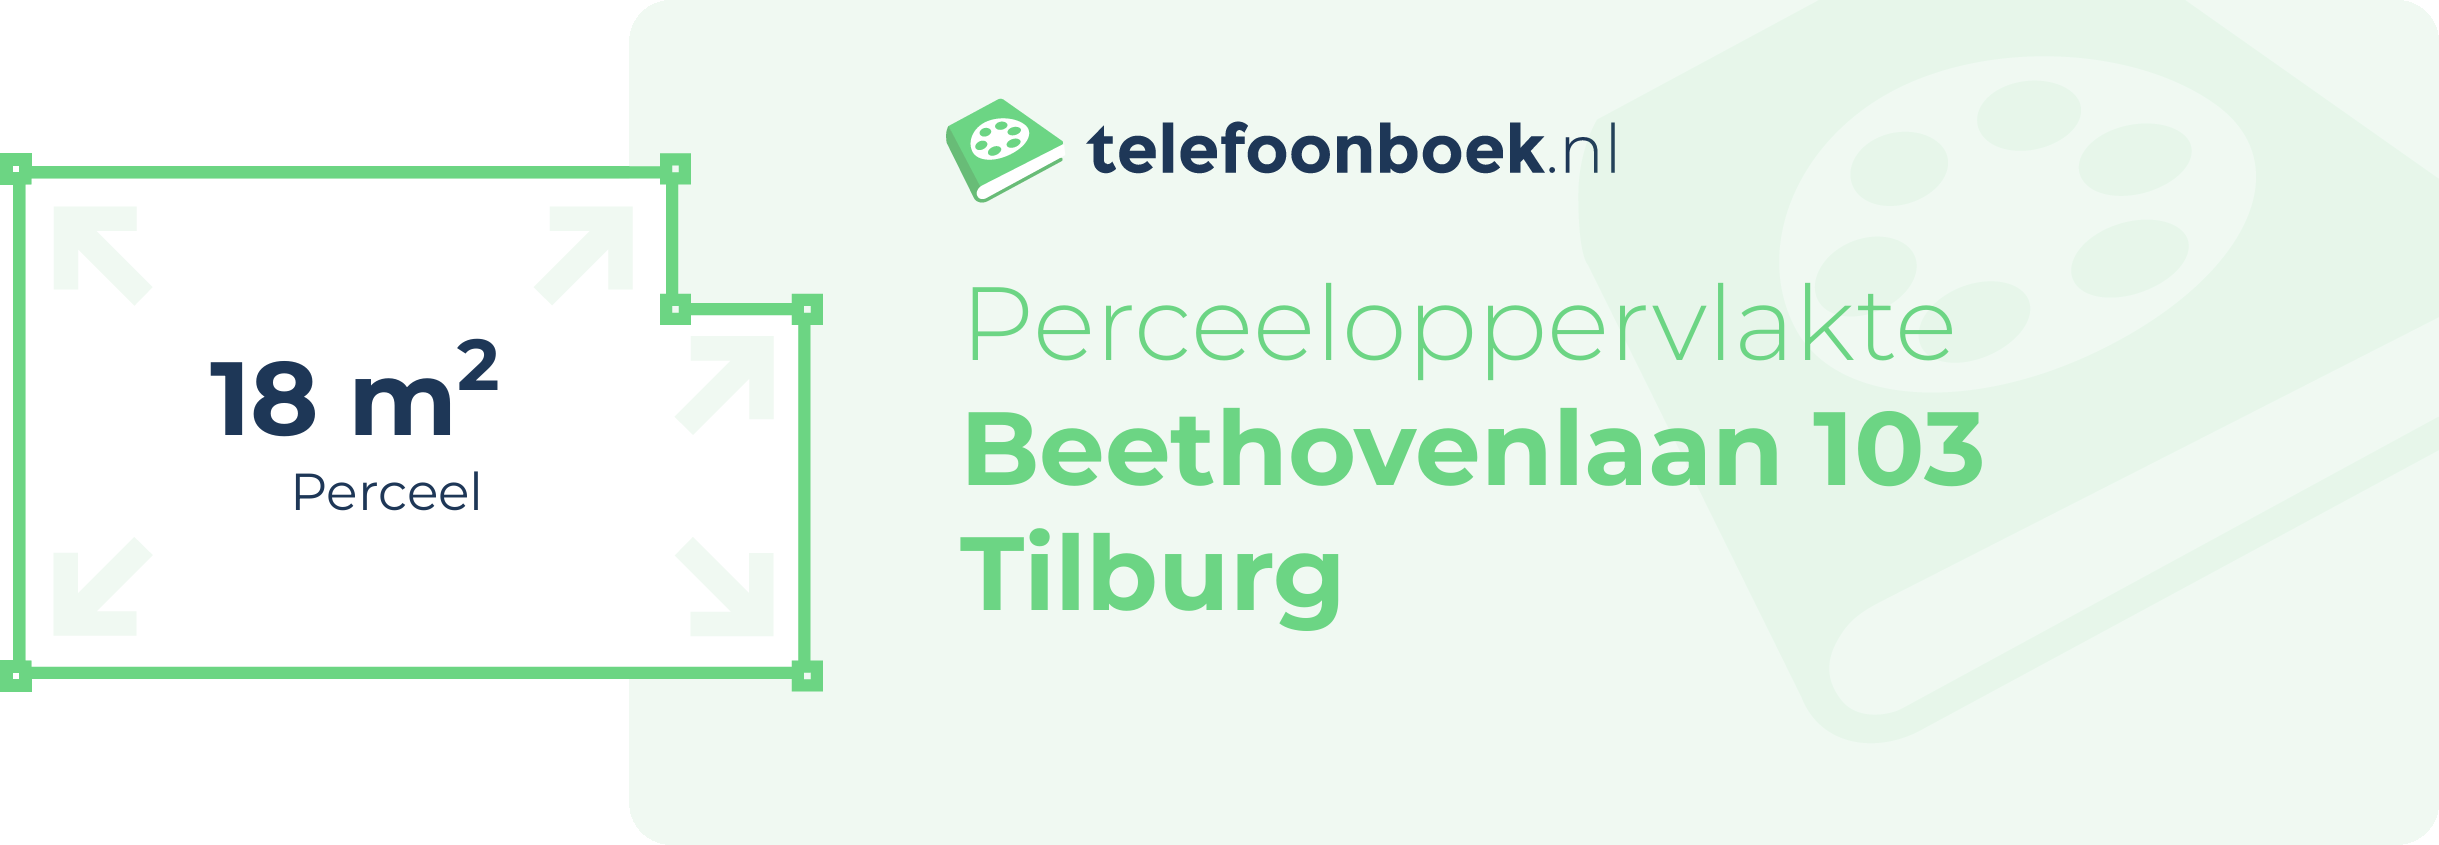 Perceeloppervlakte Beethovenlaan 103 Tilburg